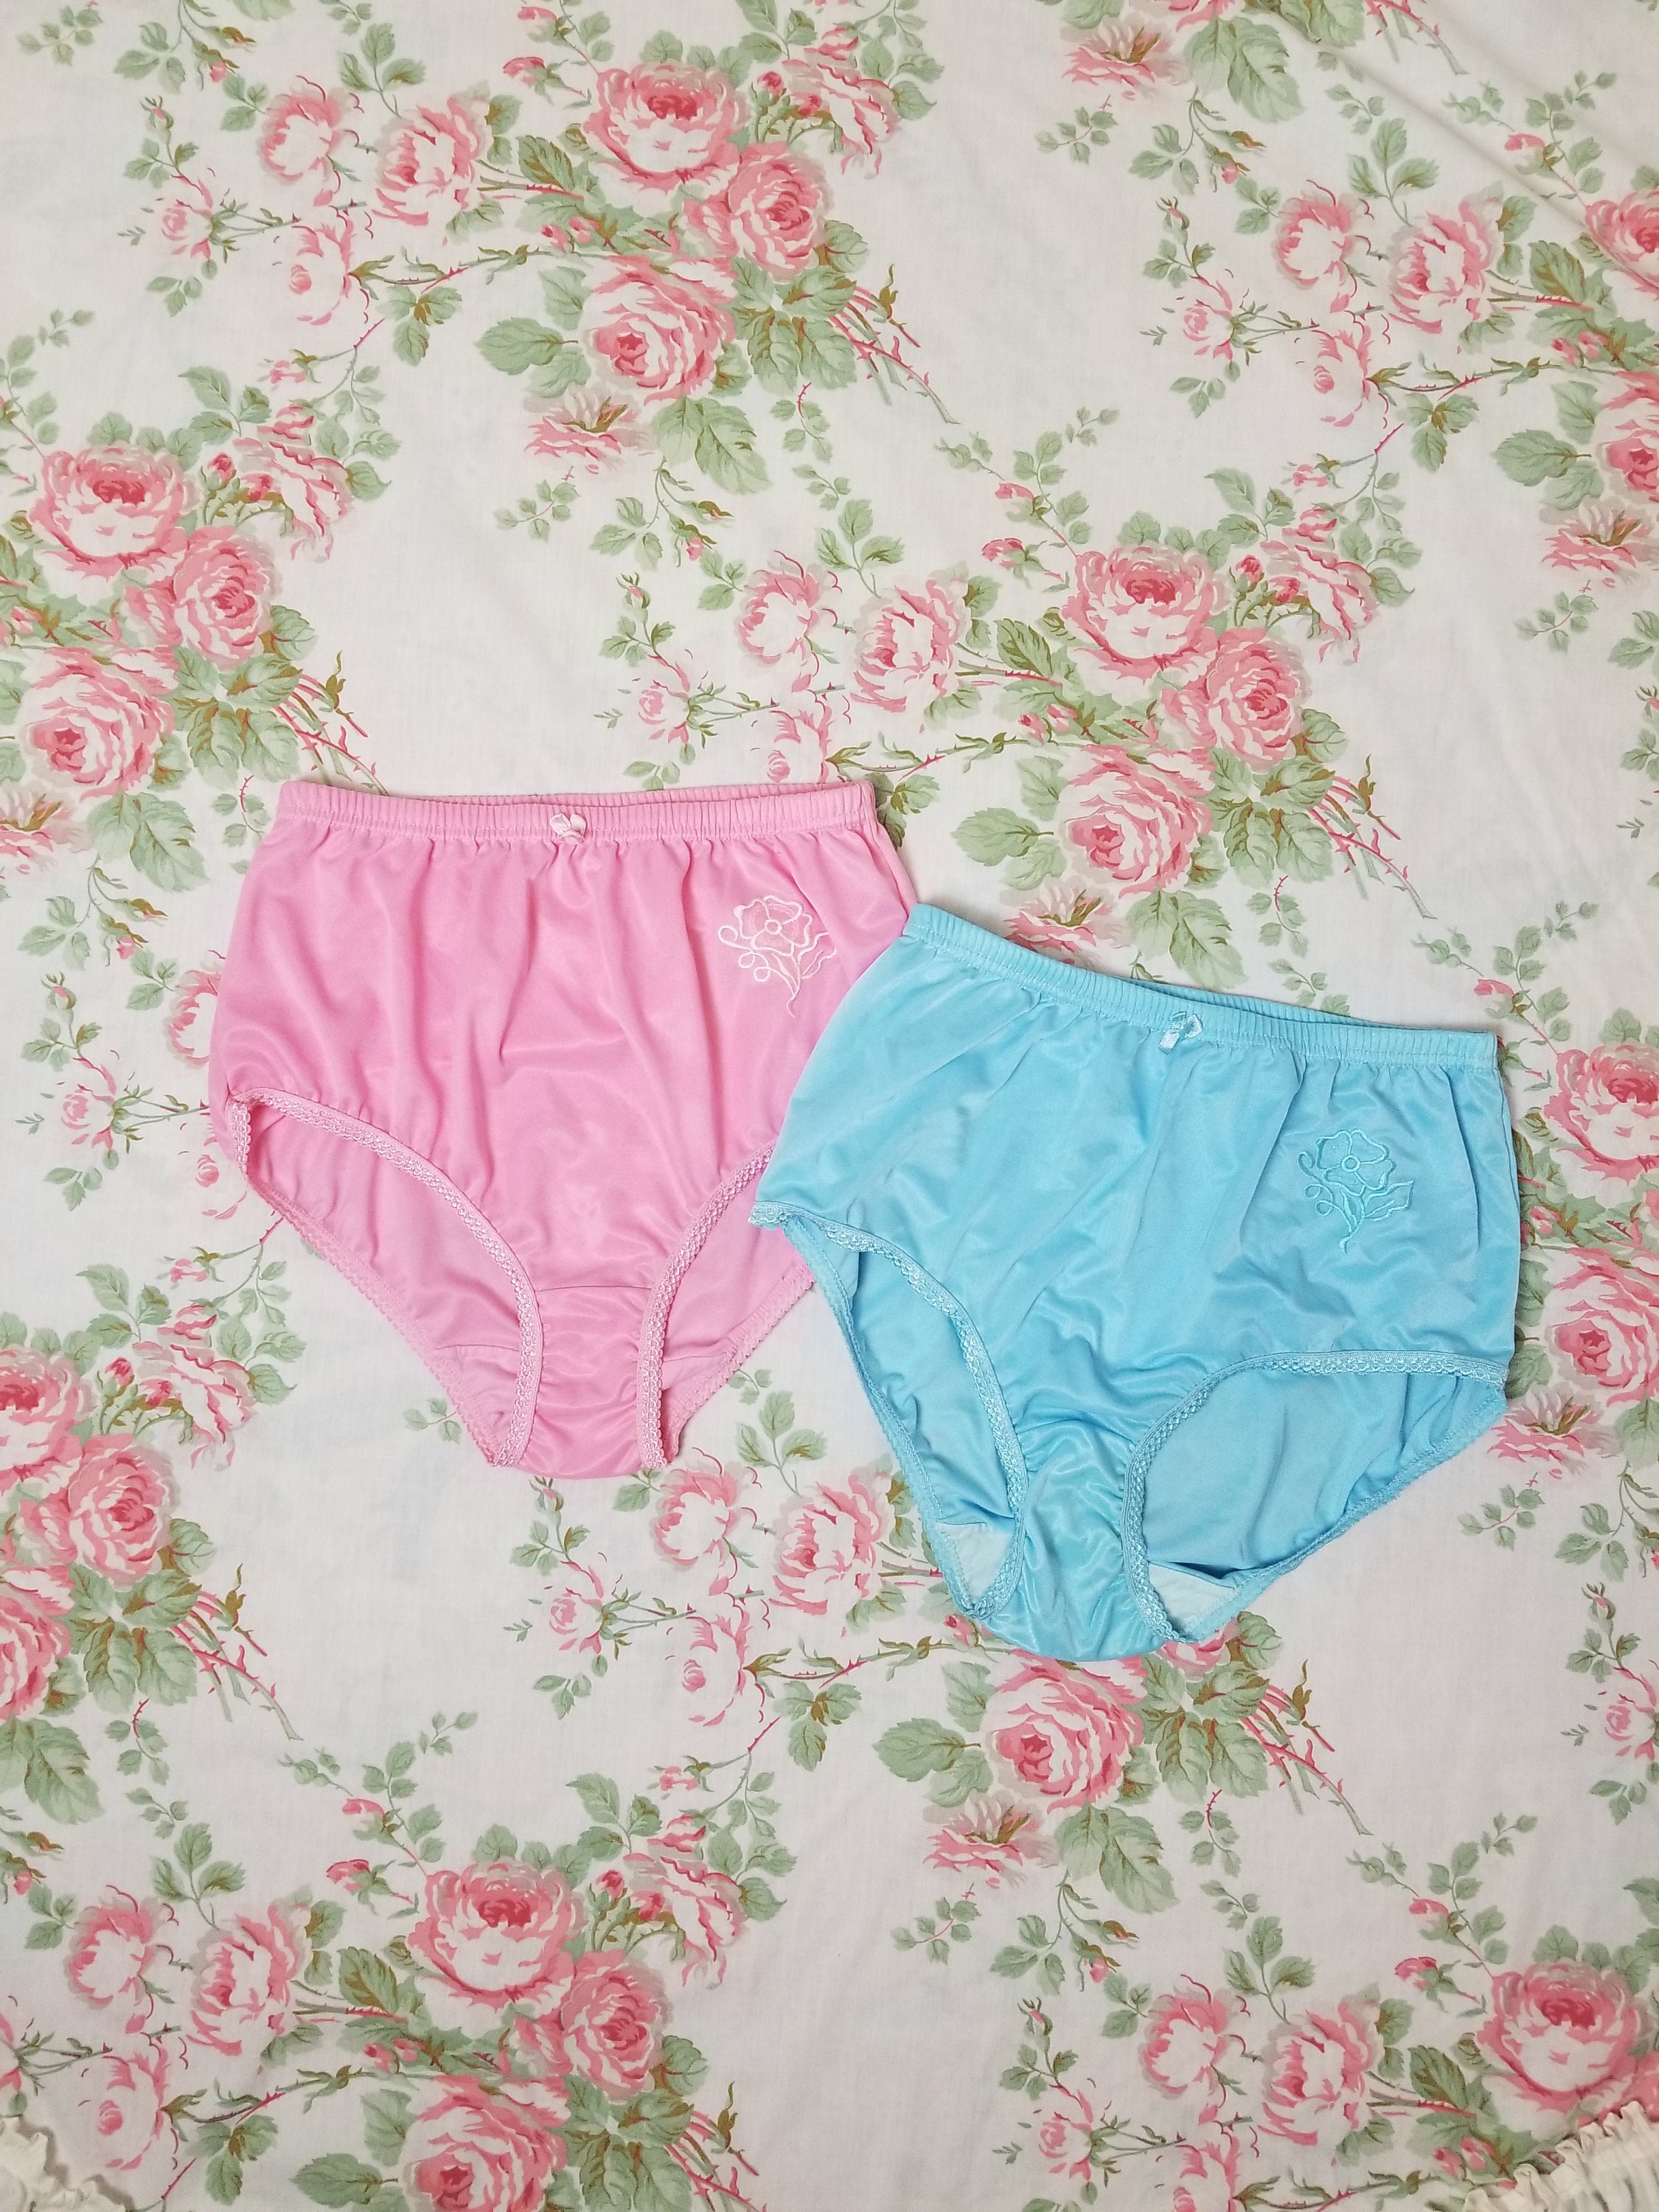 NEW Women's SOEN Panties Underwear FULL sz M MEDIUM box of 12 pastel flower